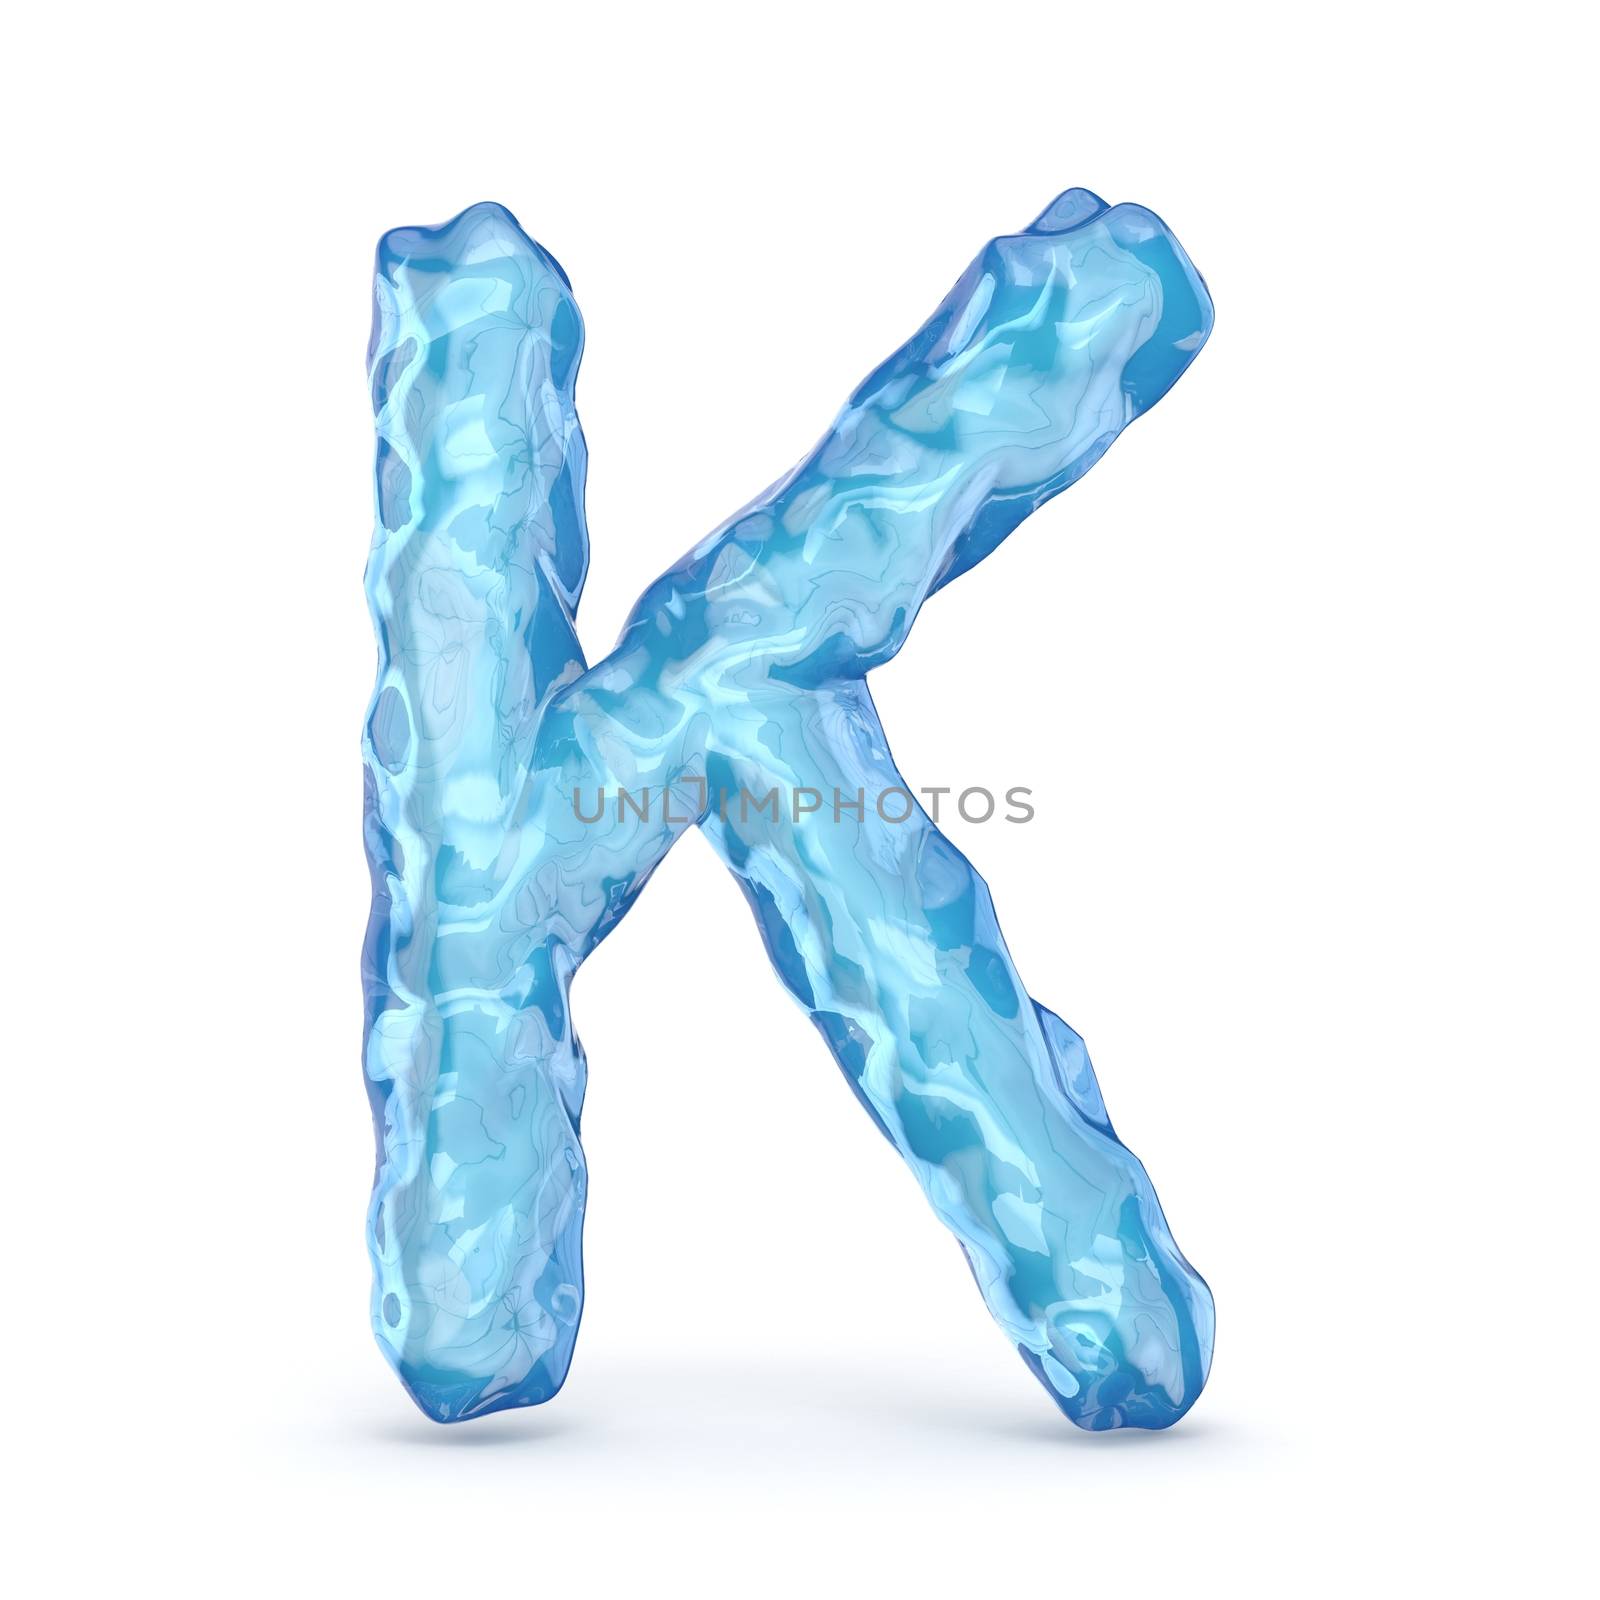 Ice font letter K 3D render illustration isolated on white background